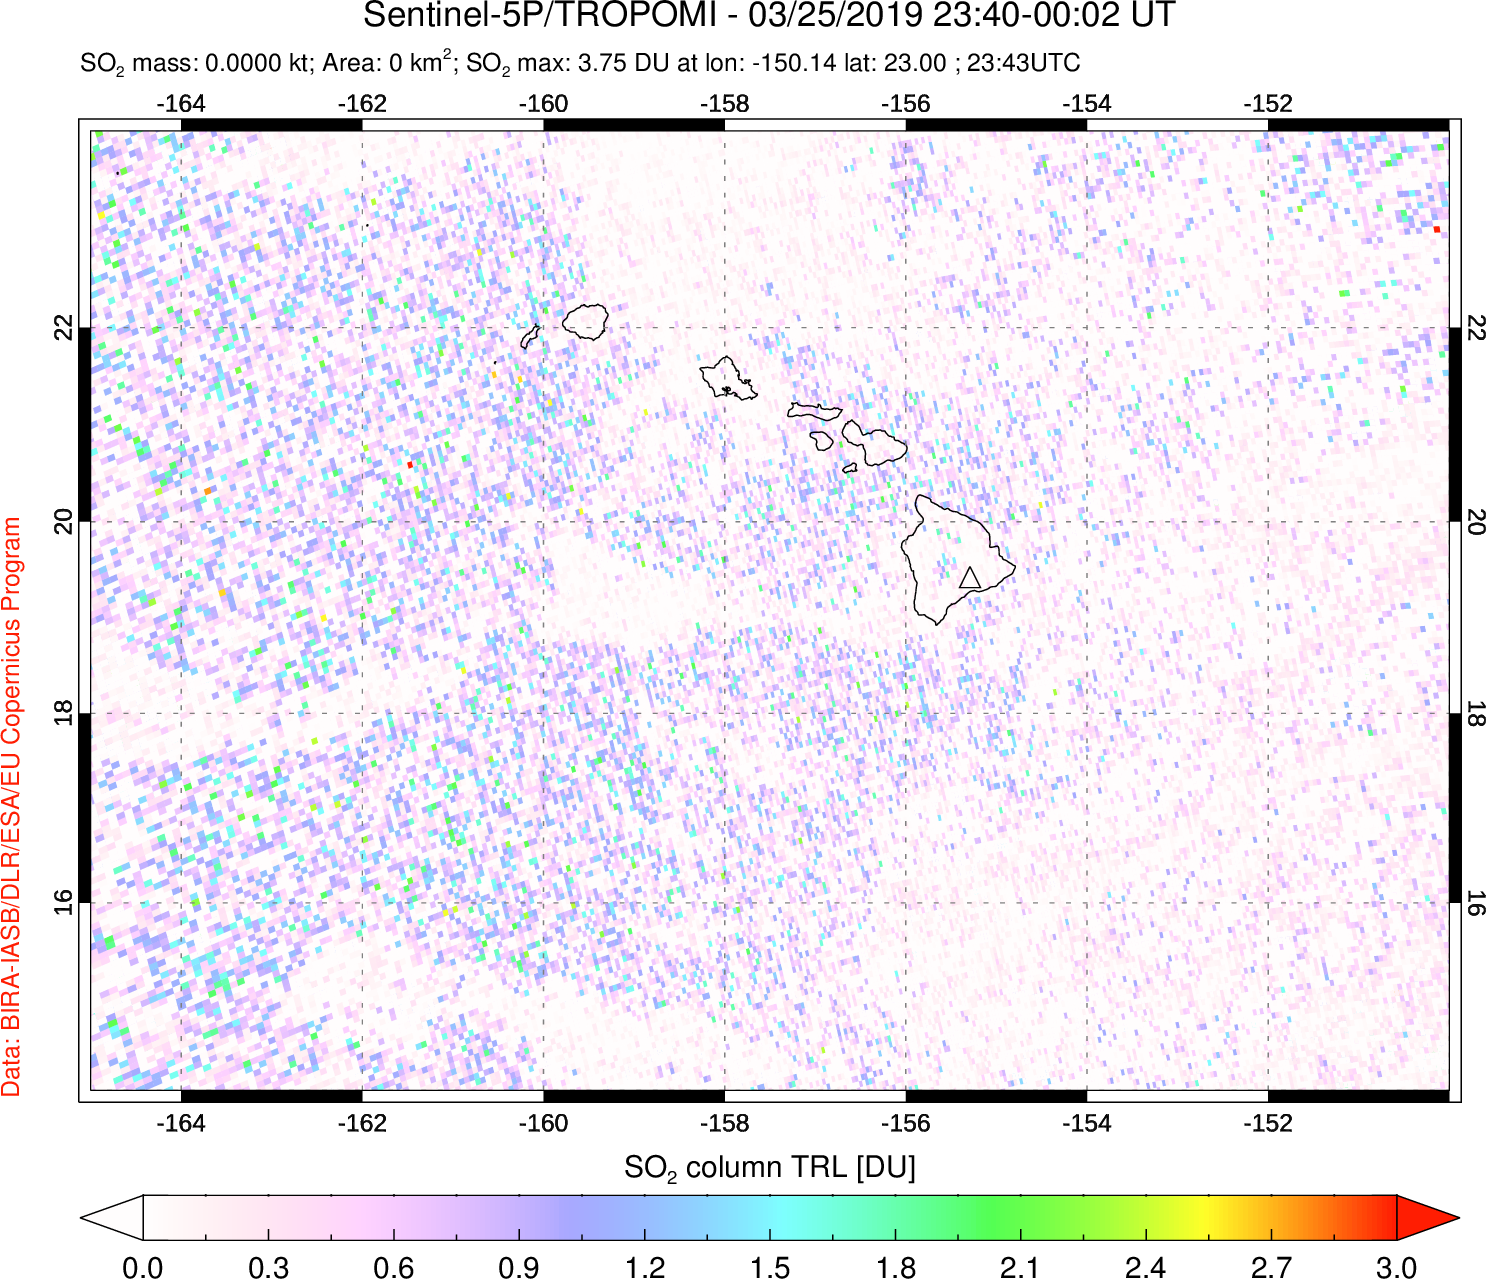 A sulfur dioxide image over Hawaii, USA on Mar 25, 2019.